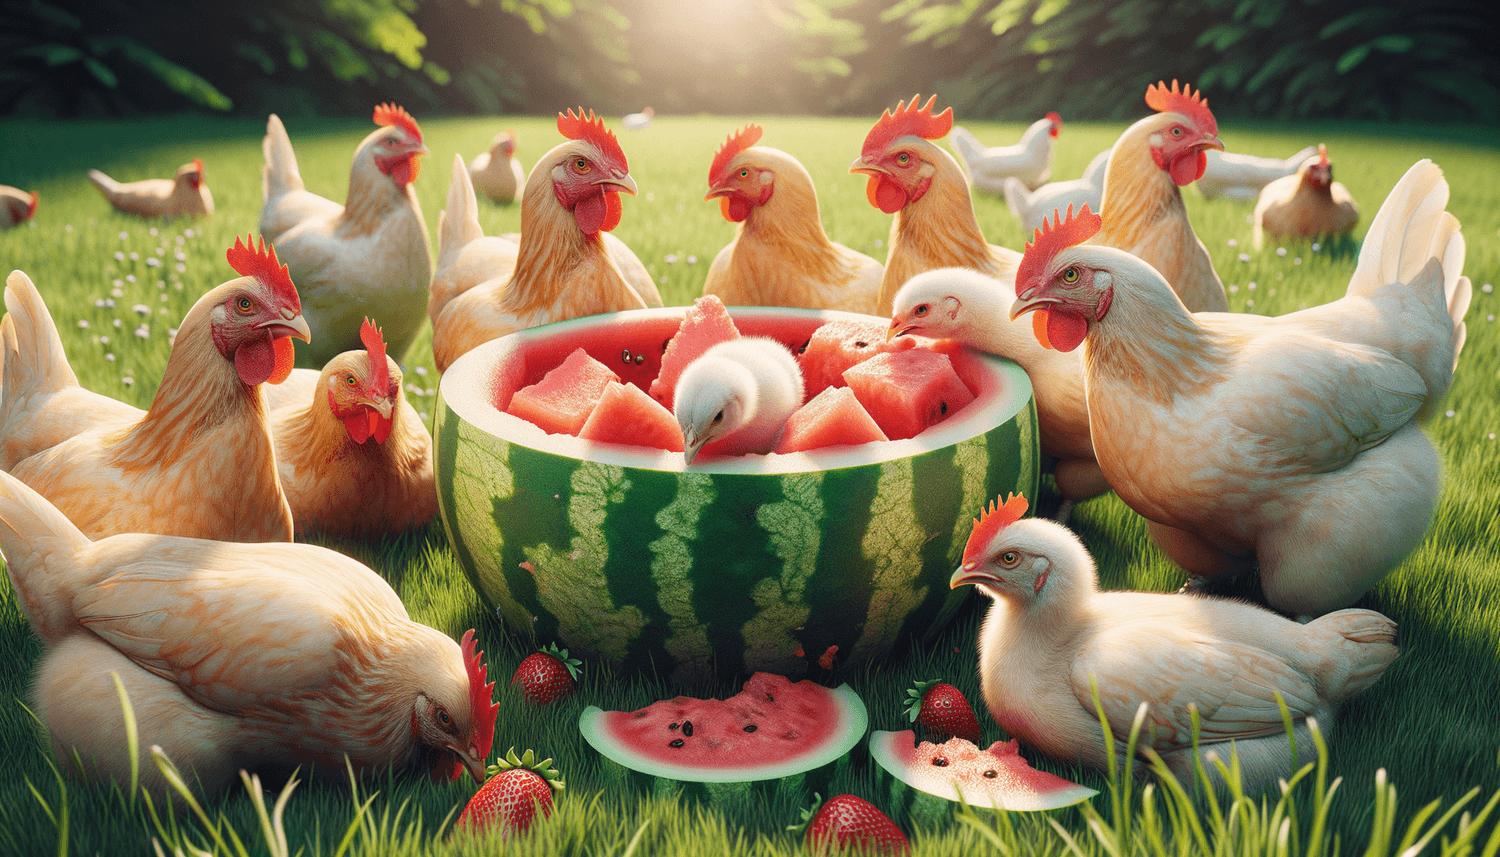 Can Chickens Eat Unripe Watermelon?